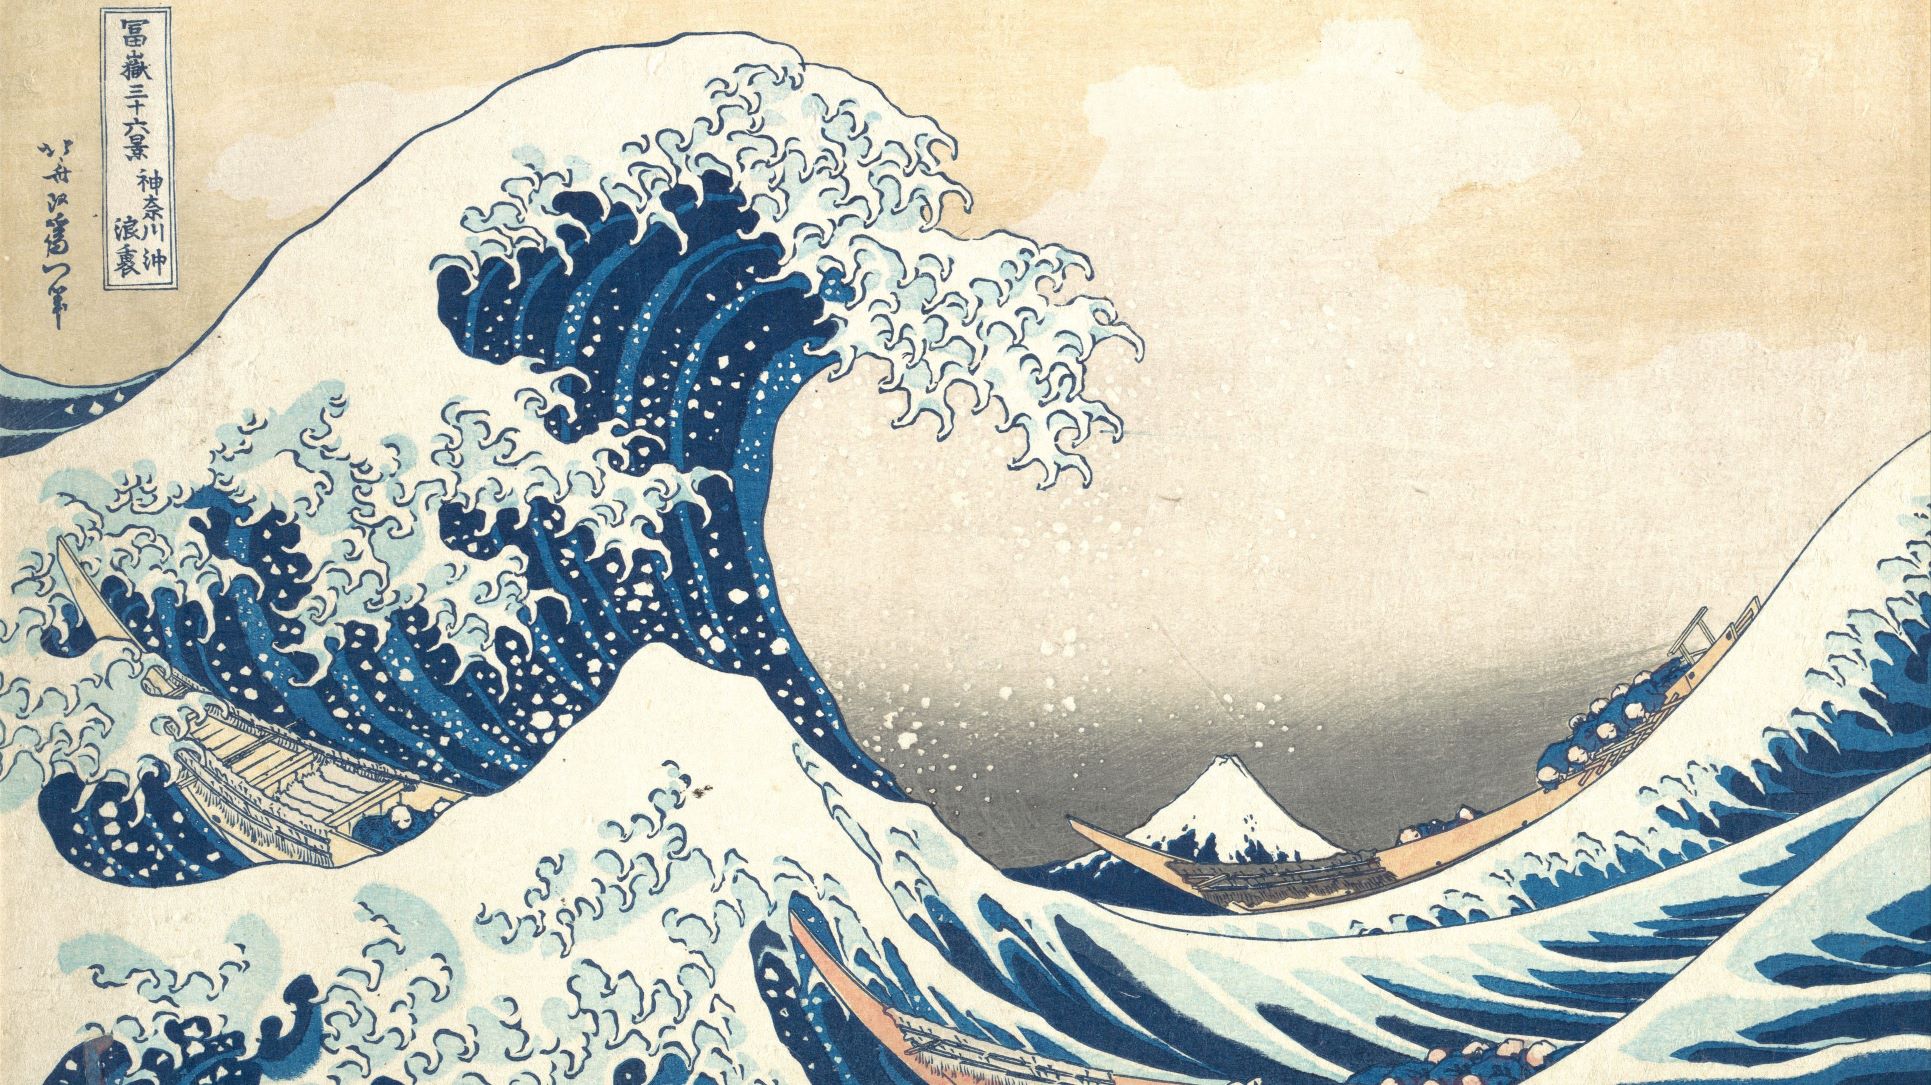 Great-wave-hokusai-19th-century